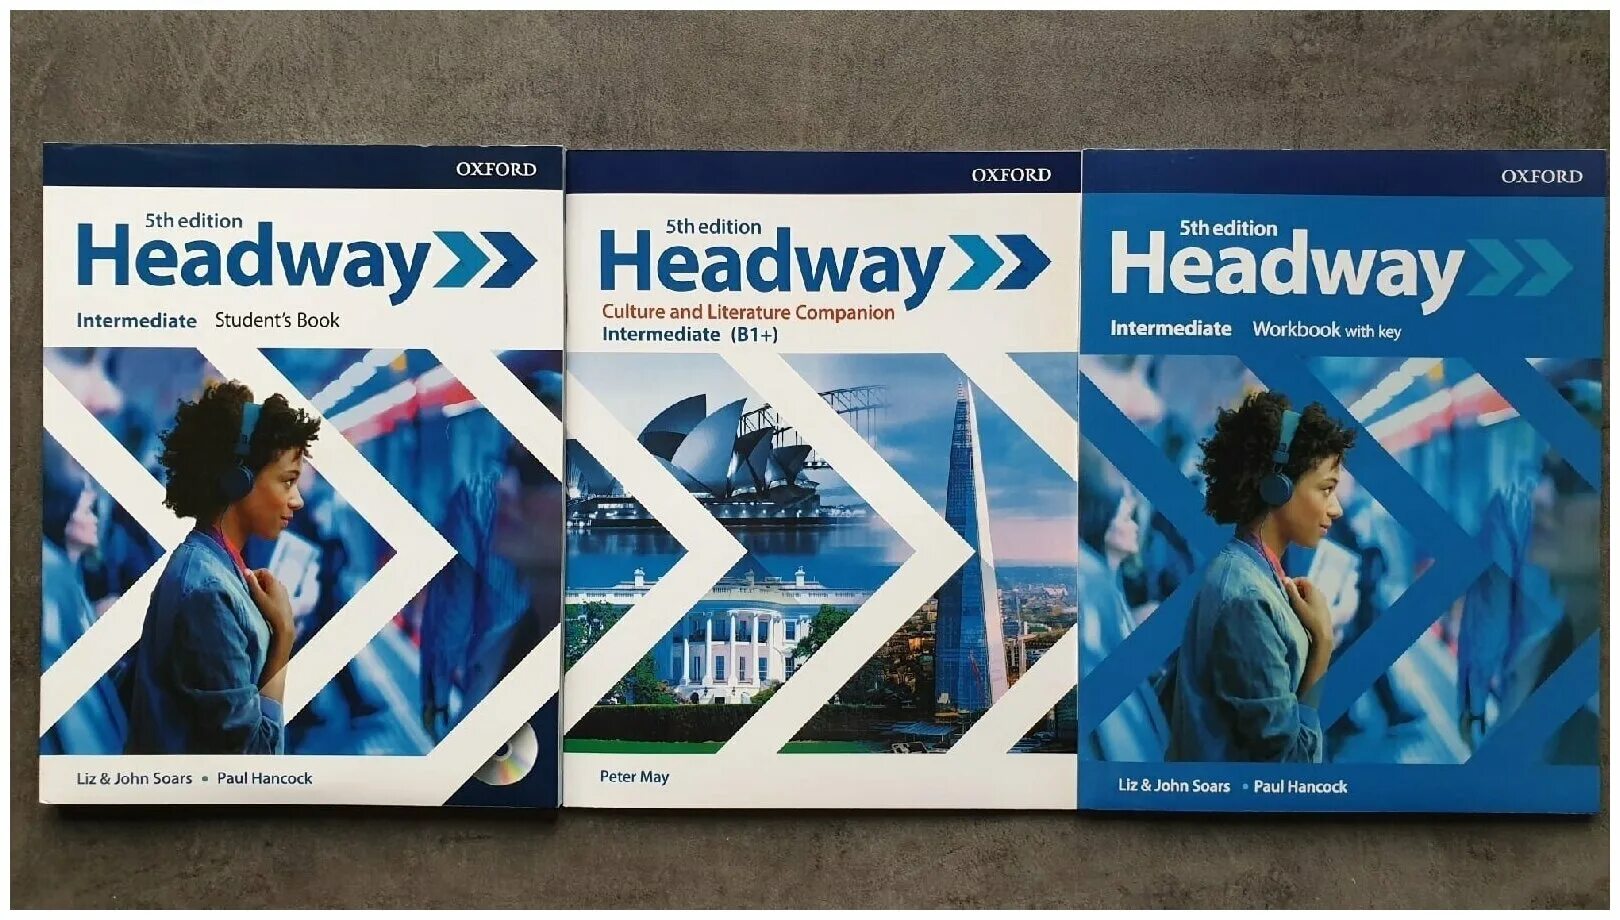 Oxford 5th Edition Headway. Headway 5 Workbook. Headway Intermediate 5th Edition. Headway книга.